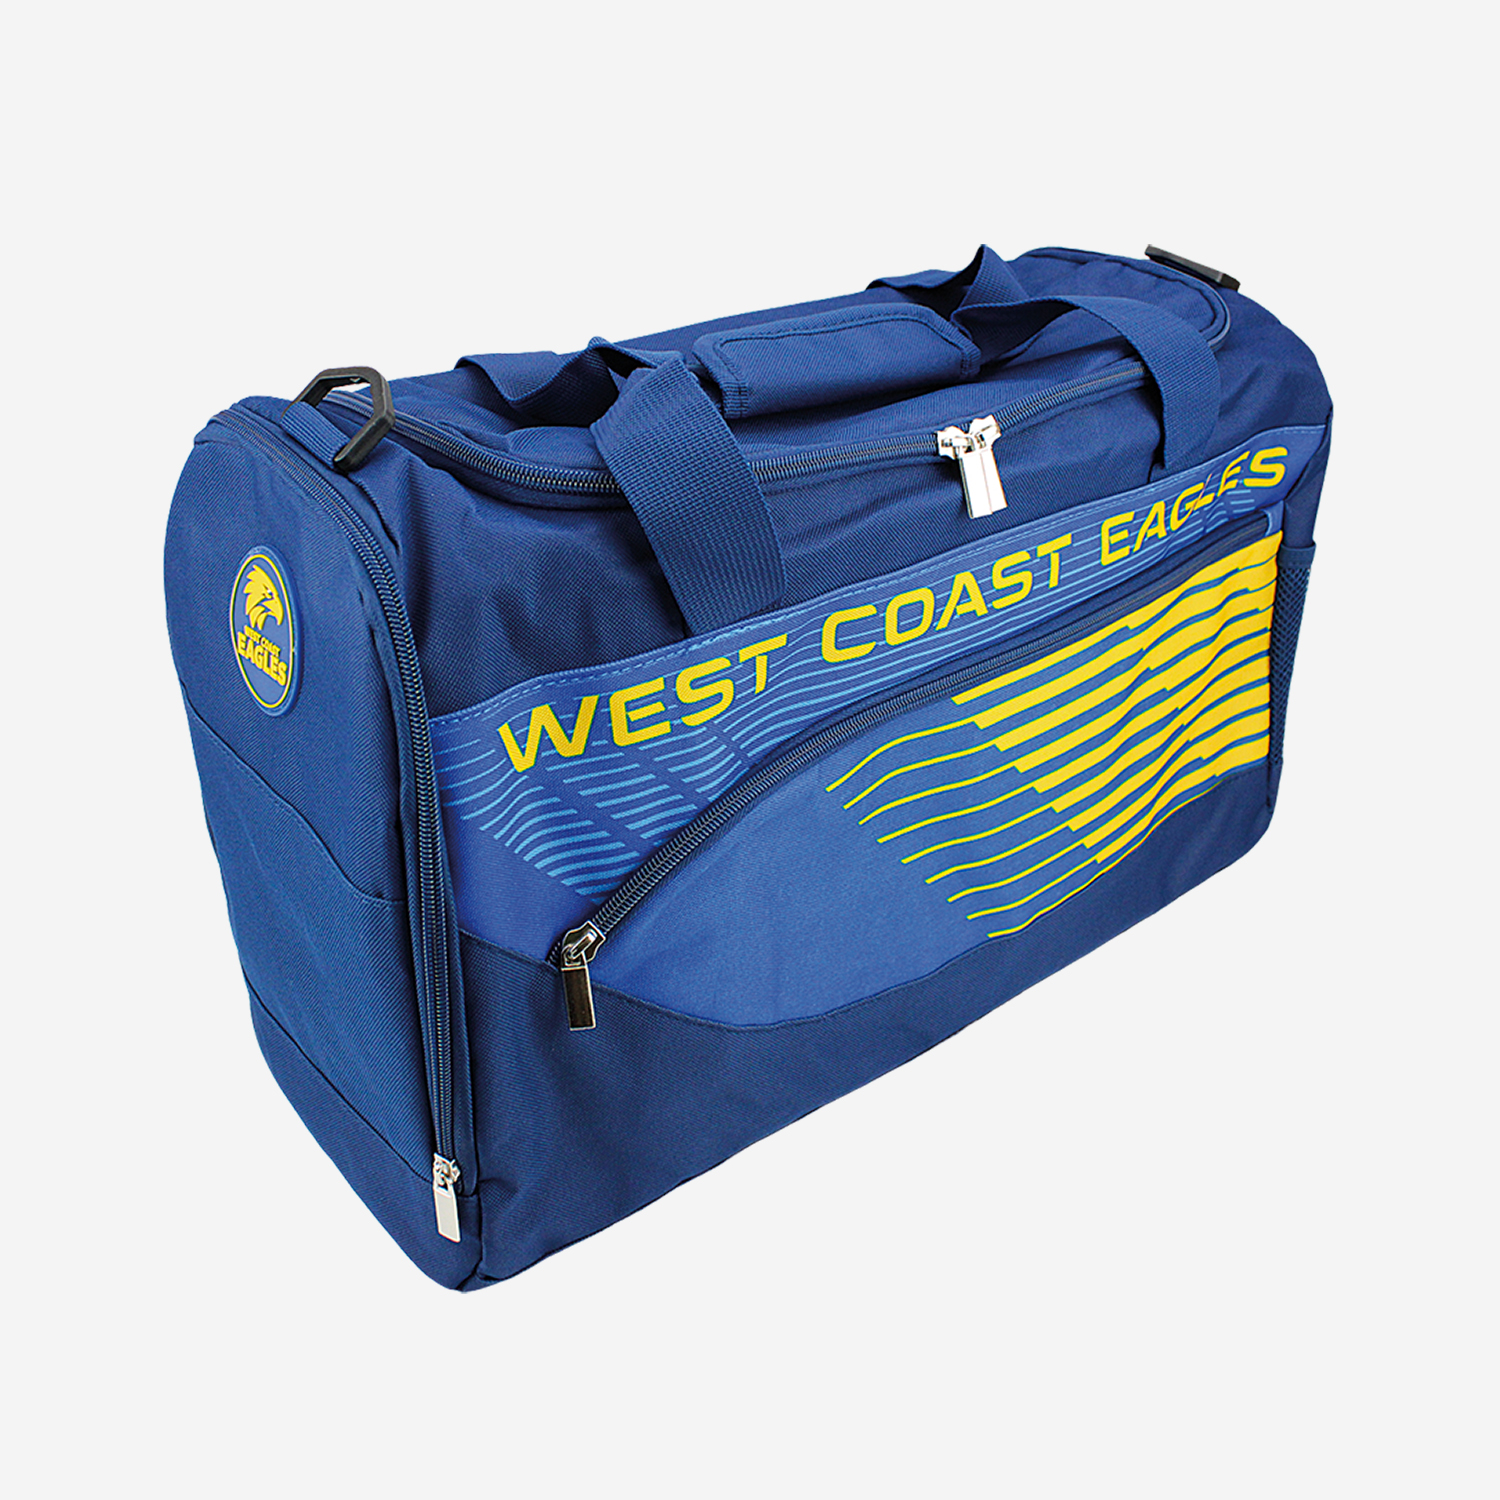 West Coast Bag